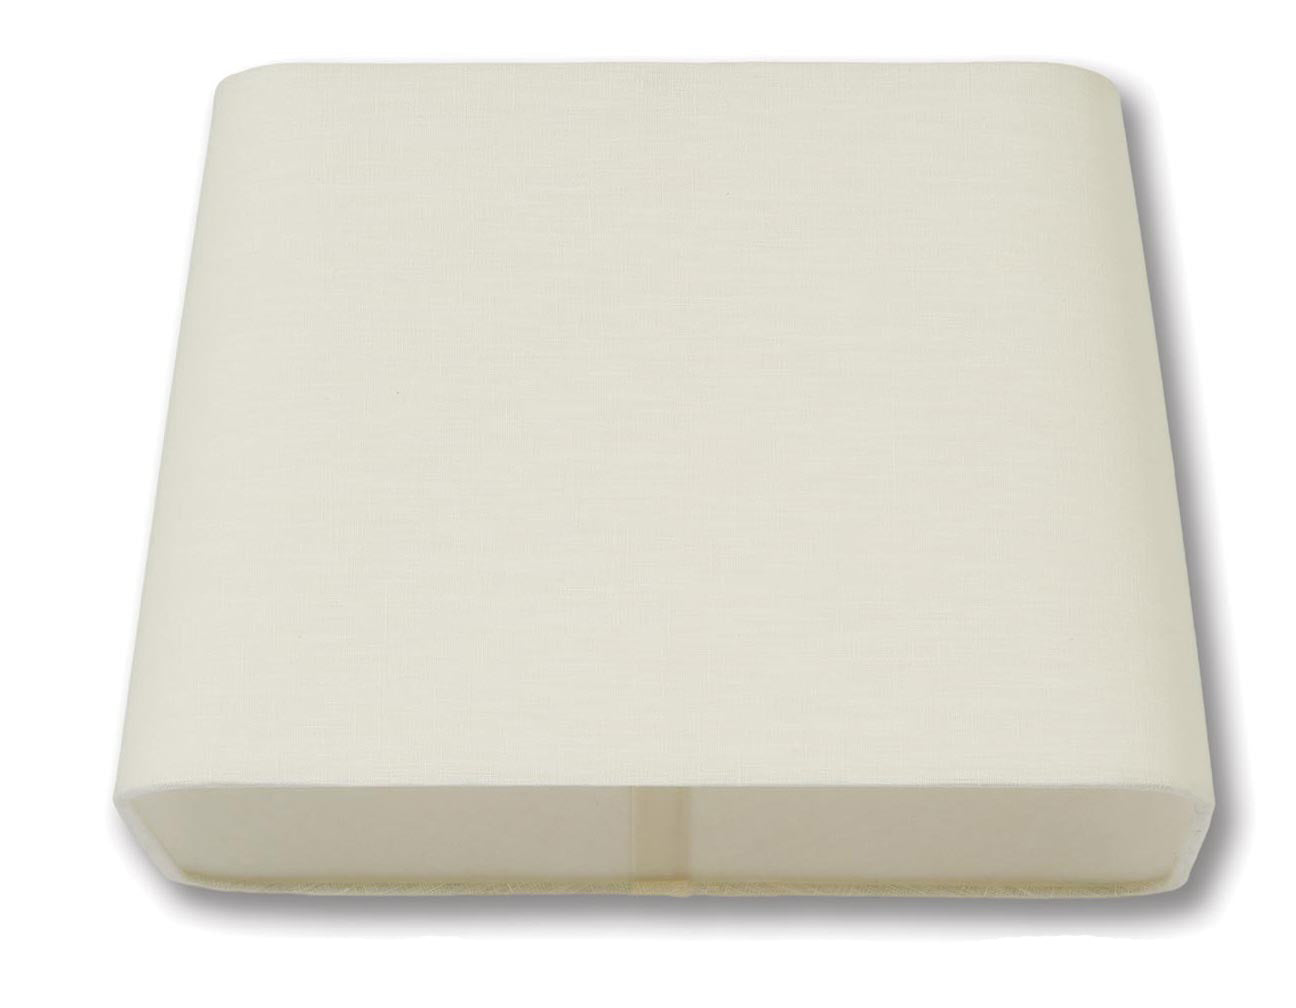 Round Corner Rectangle Hardback Shades - Off White Color, 100% Fine Linen